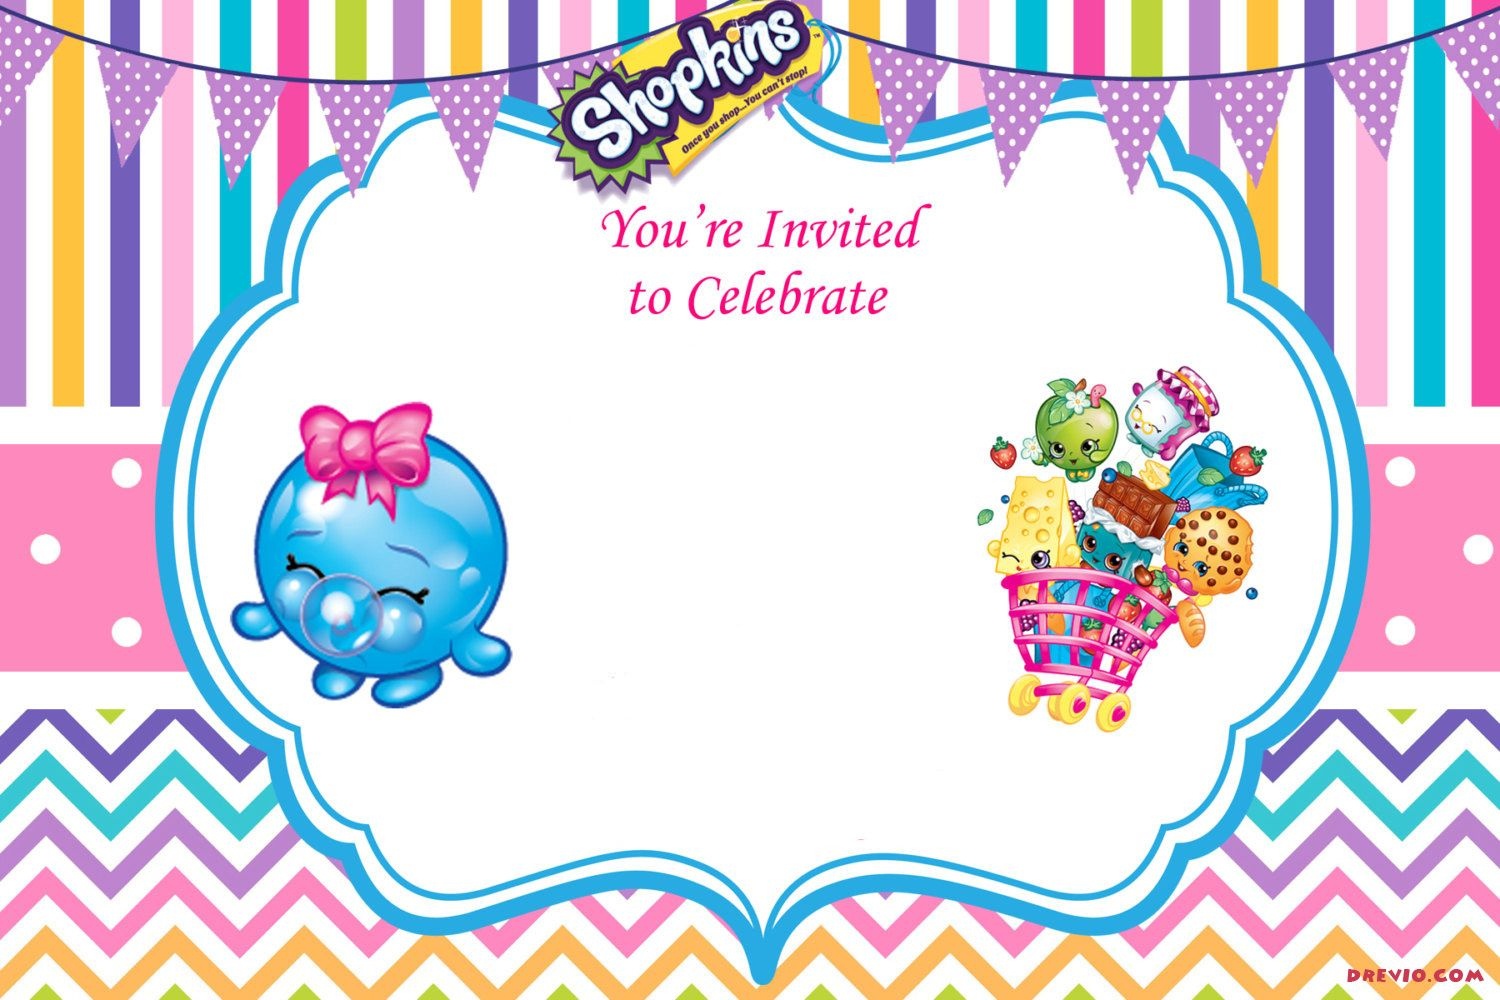 Updated - Free Printable Shopkins Birthday Invitation | Event - Free Printable Shopkins Invitations